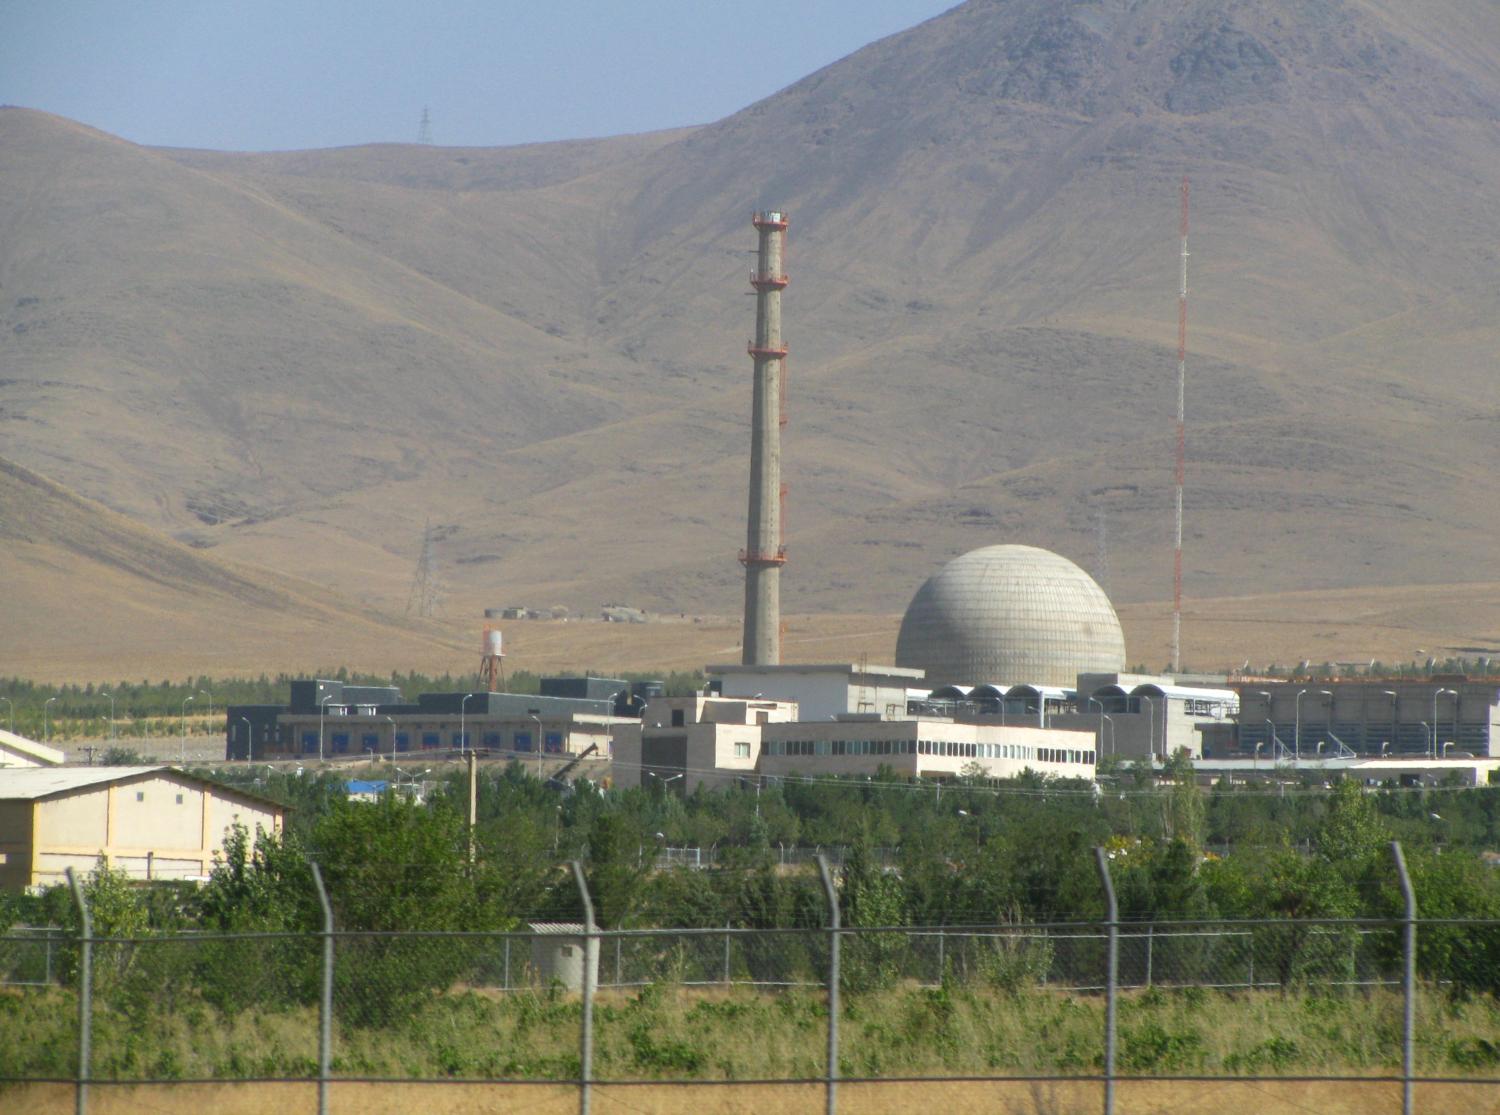 Wikimedia Commons/Nanking2012 - A photo of the Arak IR-40 heavy water reactor in Iran